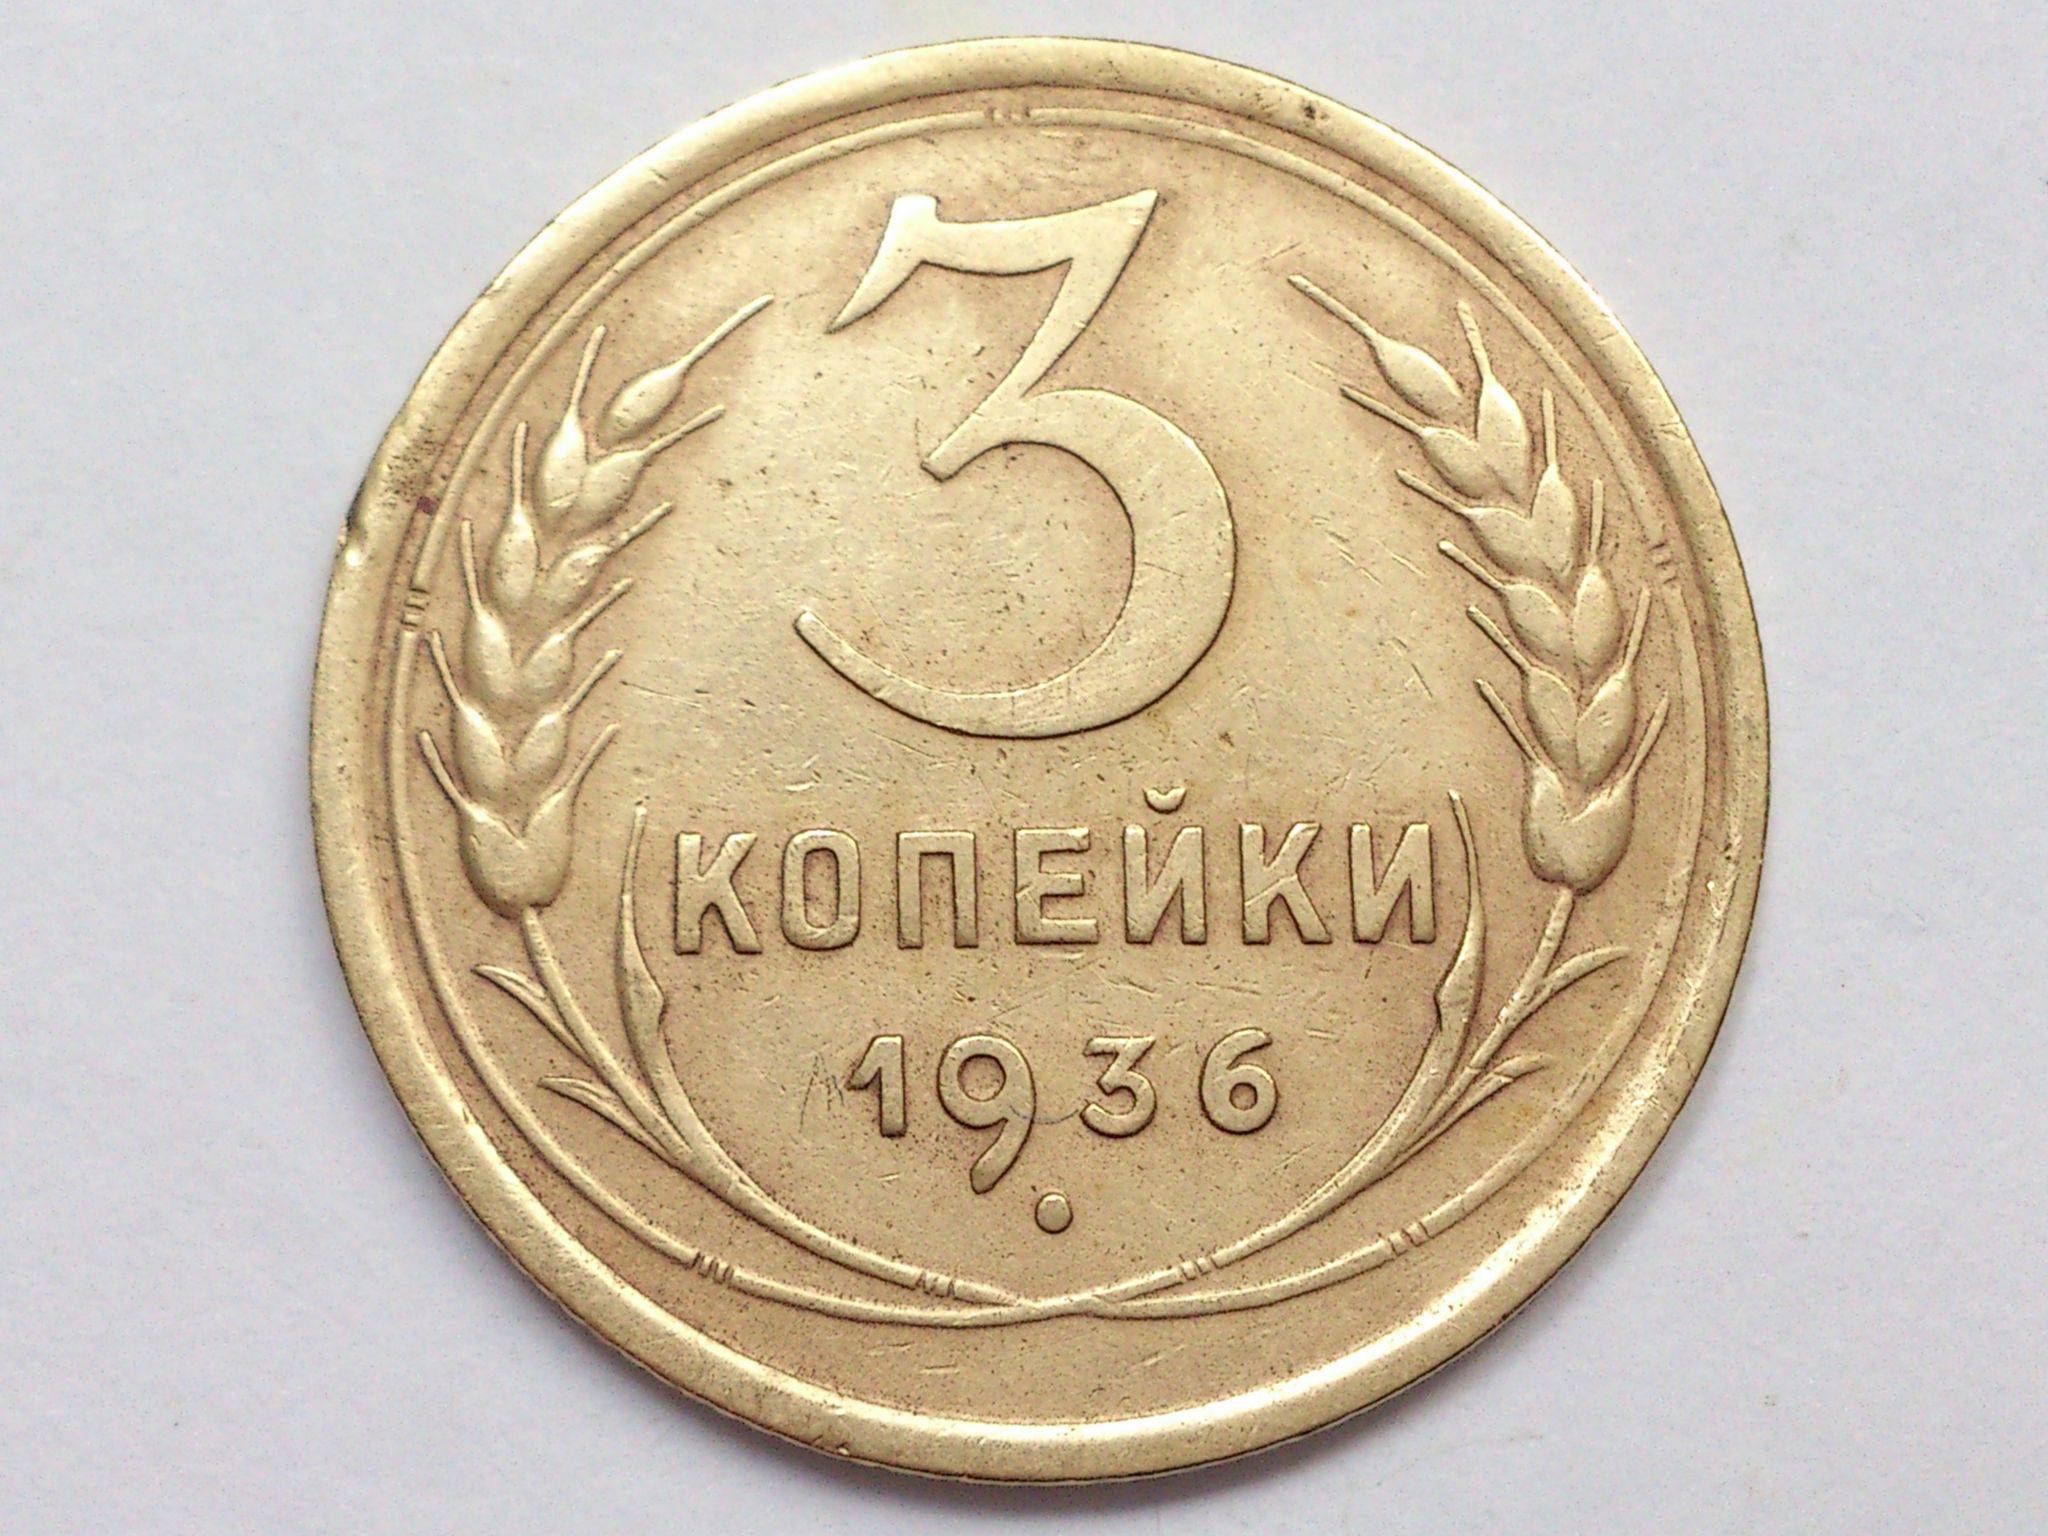 3 1931. 3 Копейки 1936. 3 Копейки 1931 f. Монета 3 копейки 1928 a022131. 3 Копейки 1931 года f.